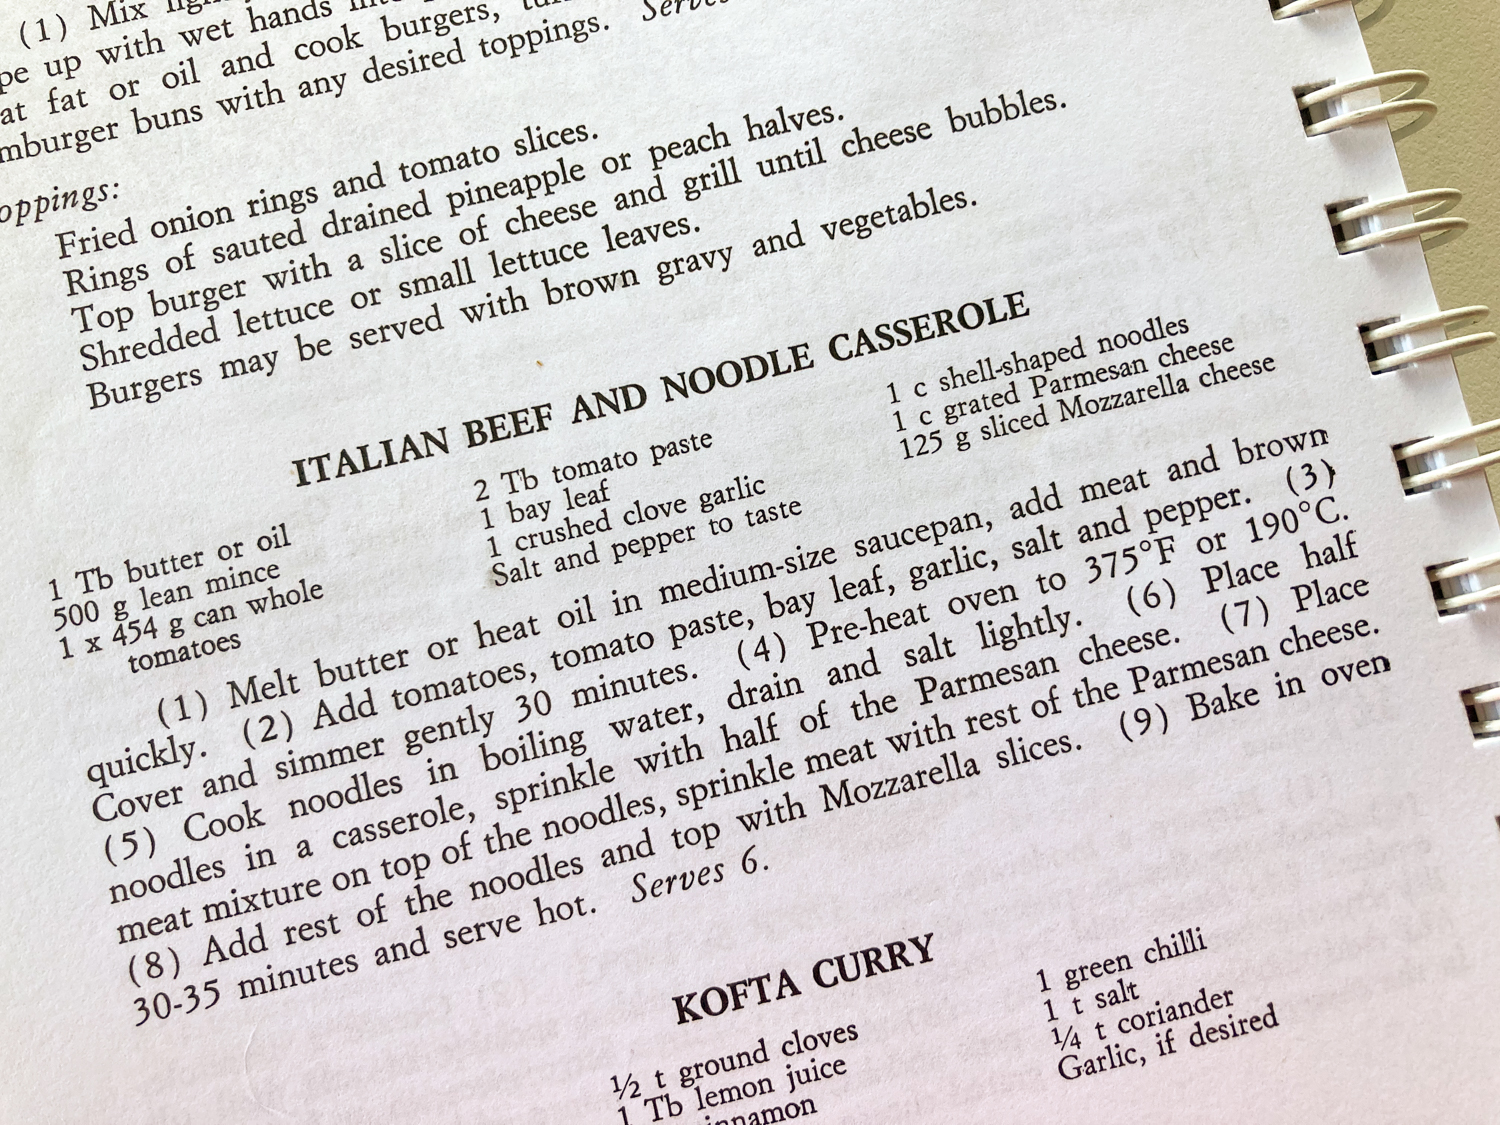 A recipe for Italian Beef & Noodle Casserole